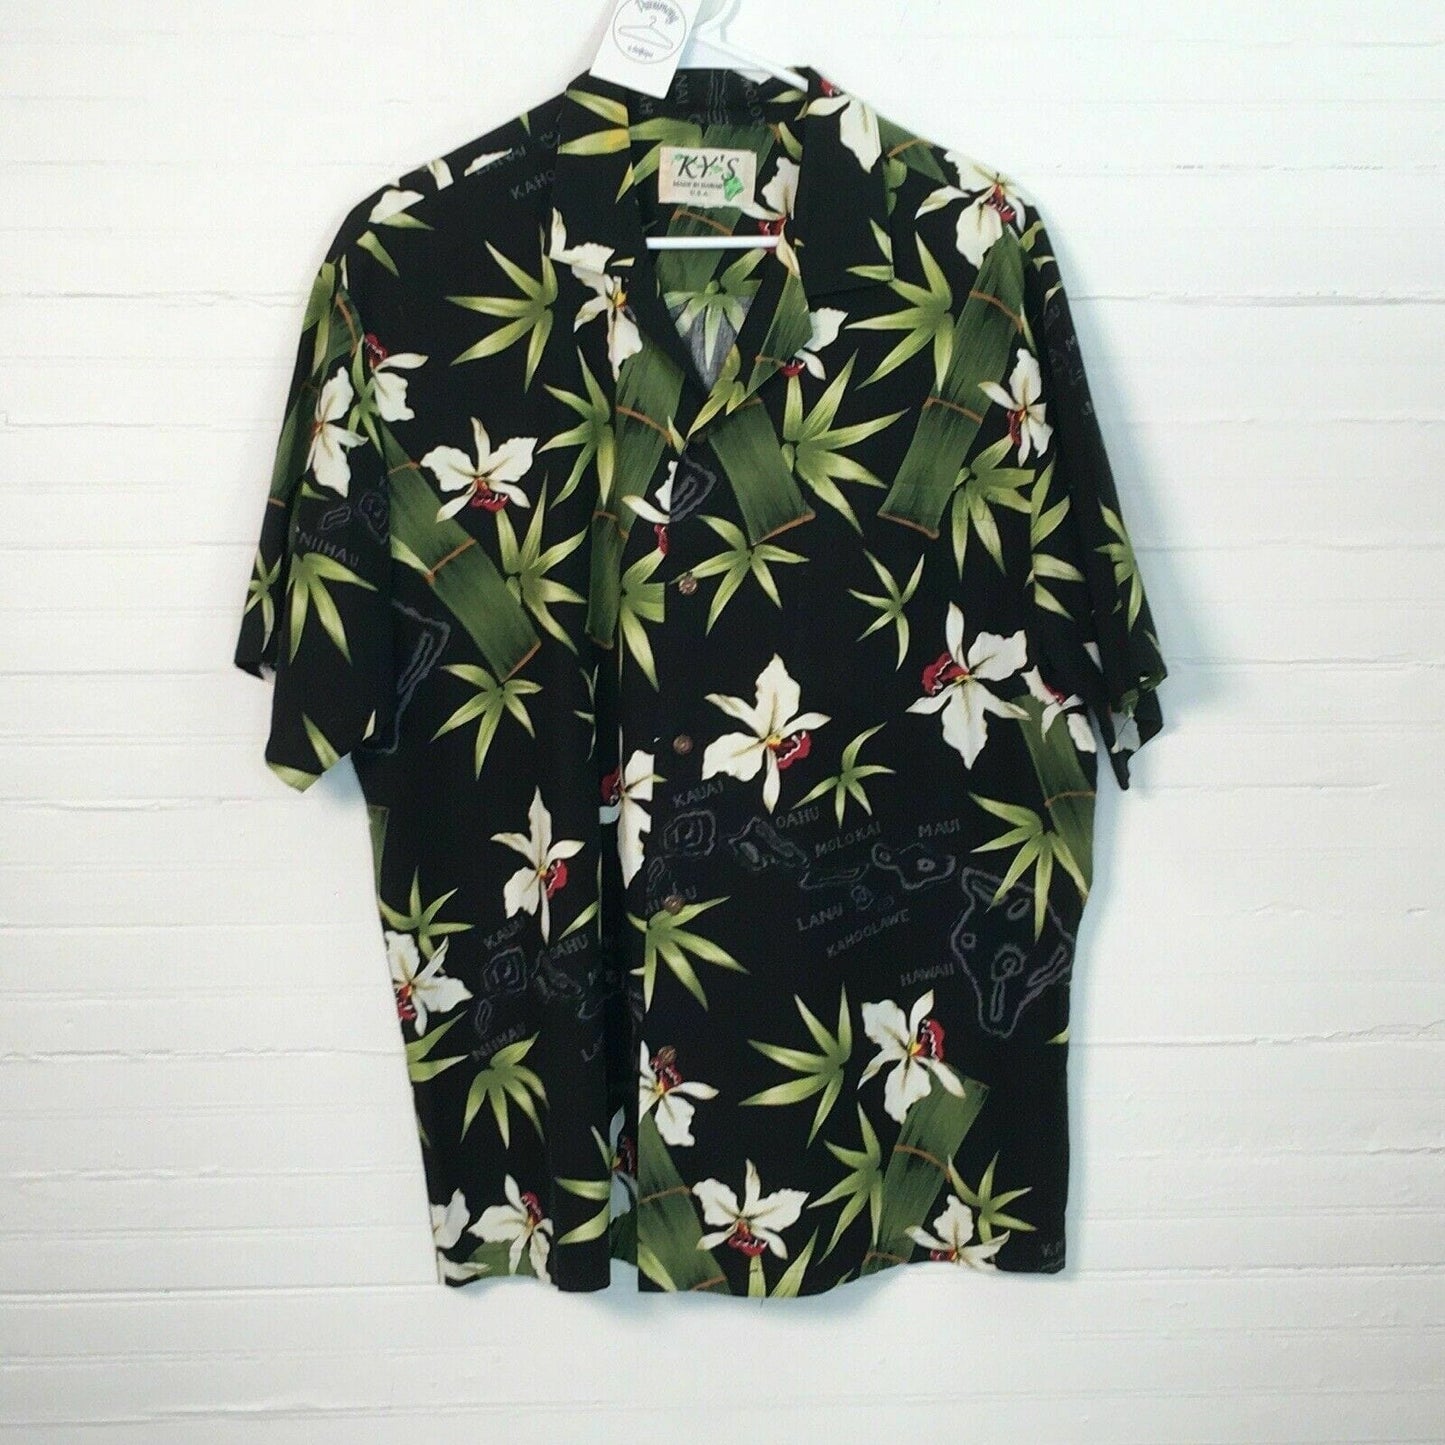 Vibrant KY’S Mens Hawaiian Shirt - XL Black